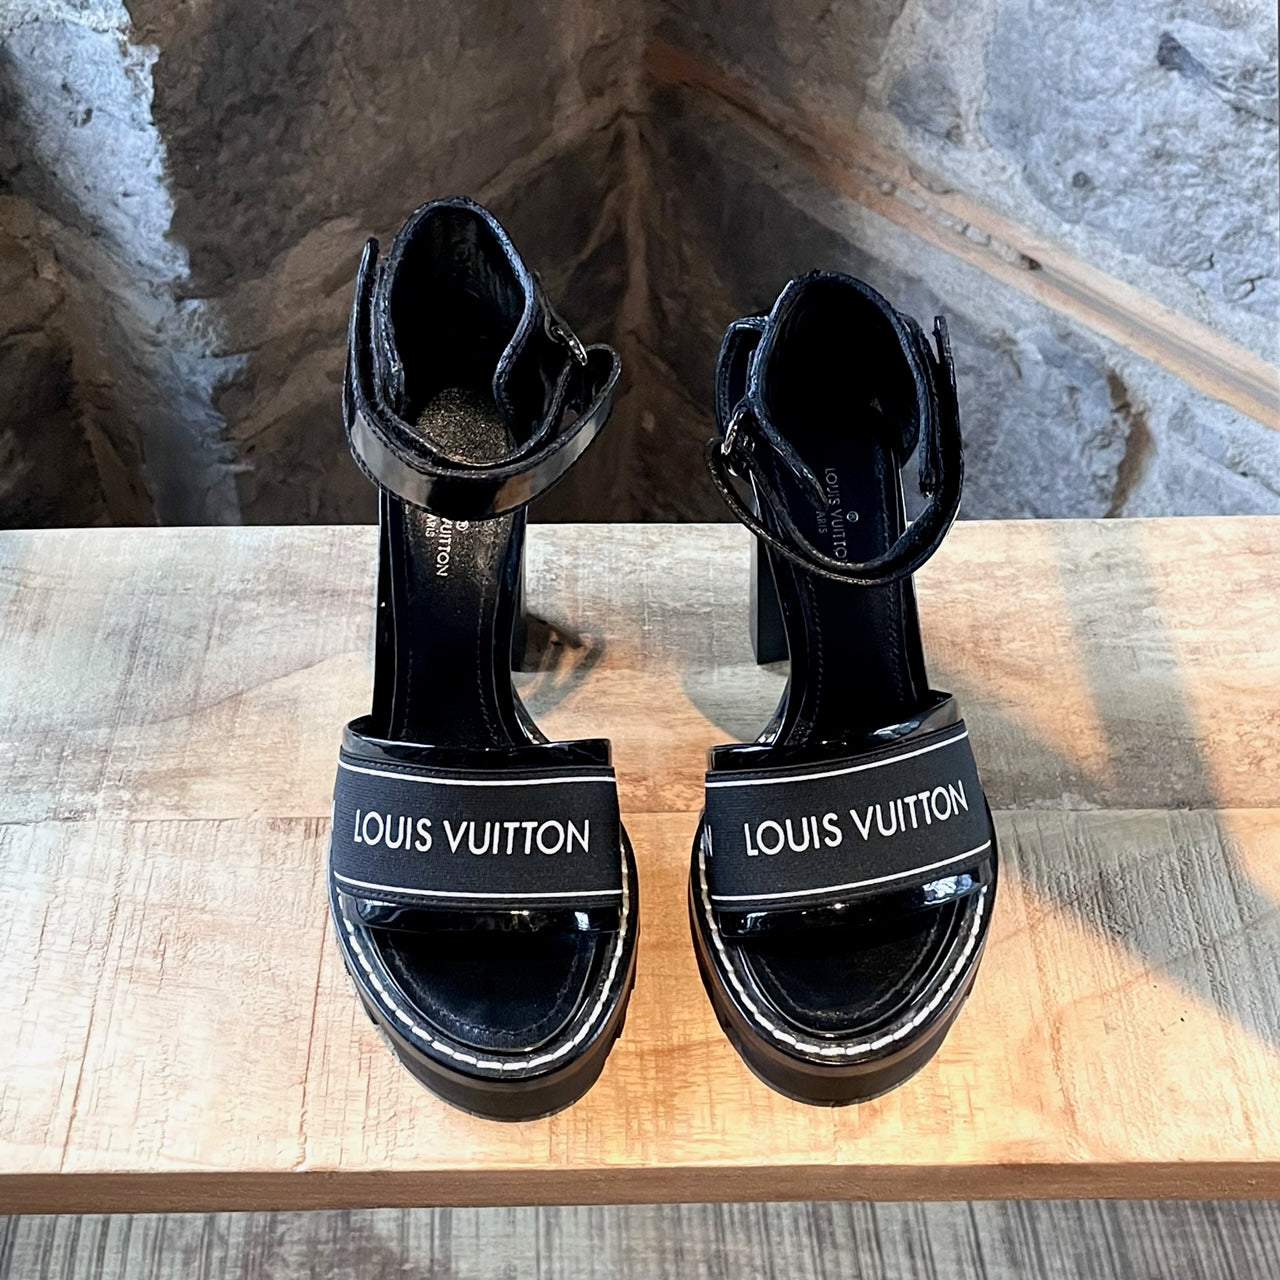 Star trail leather sandal Louis Vuitton Black size 39 IT in